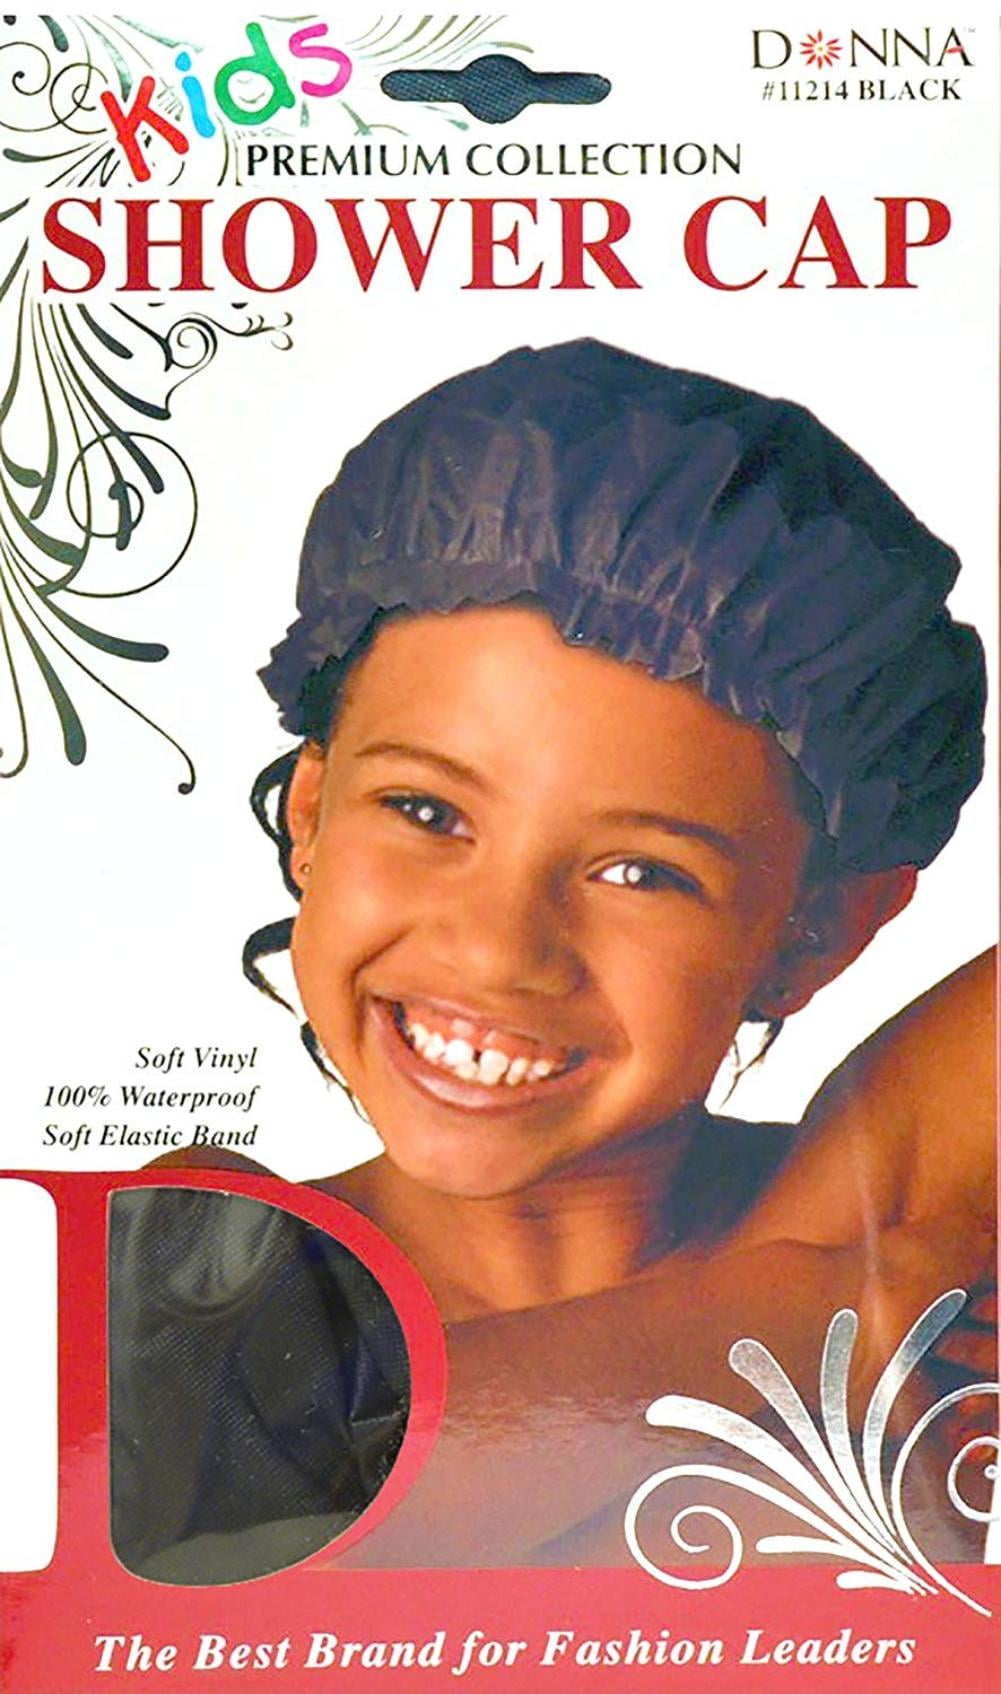 DONNA KIDS PREMIUM COLLECTION SHOWER CAP 100% WATERPROOF #11214 BLACK 